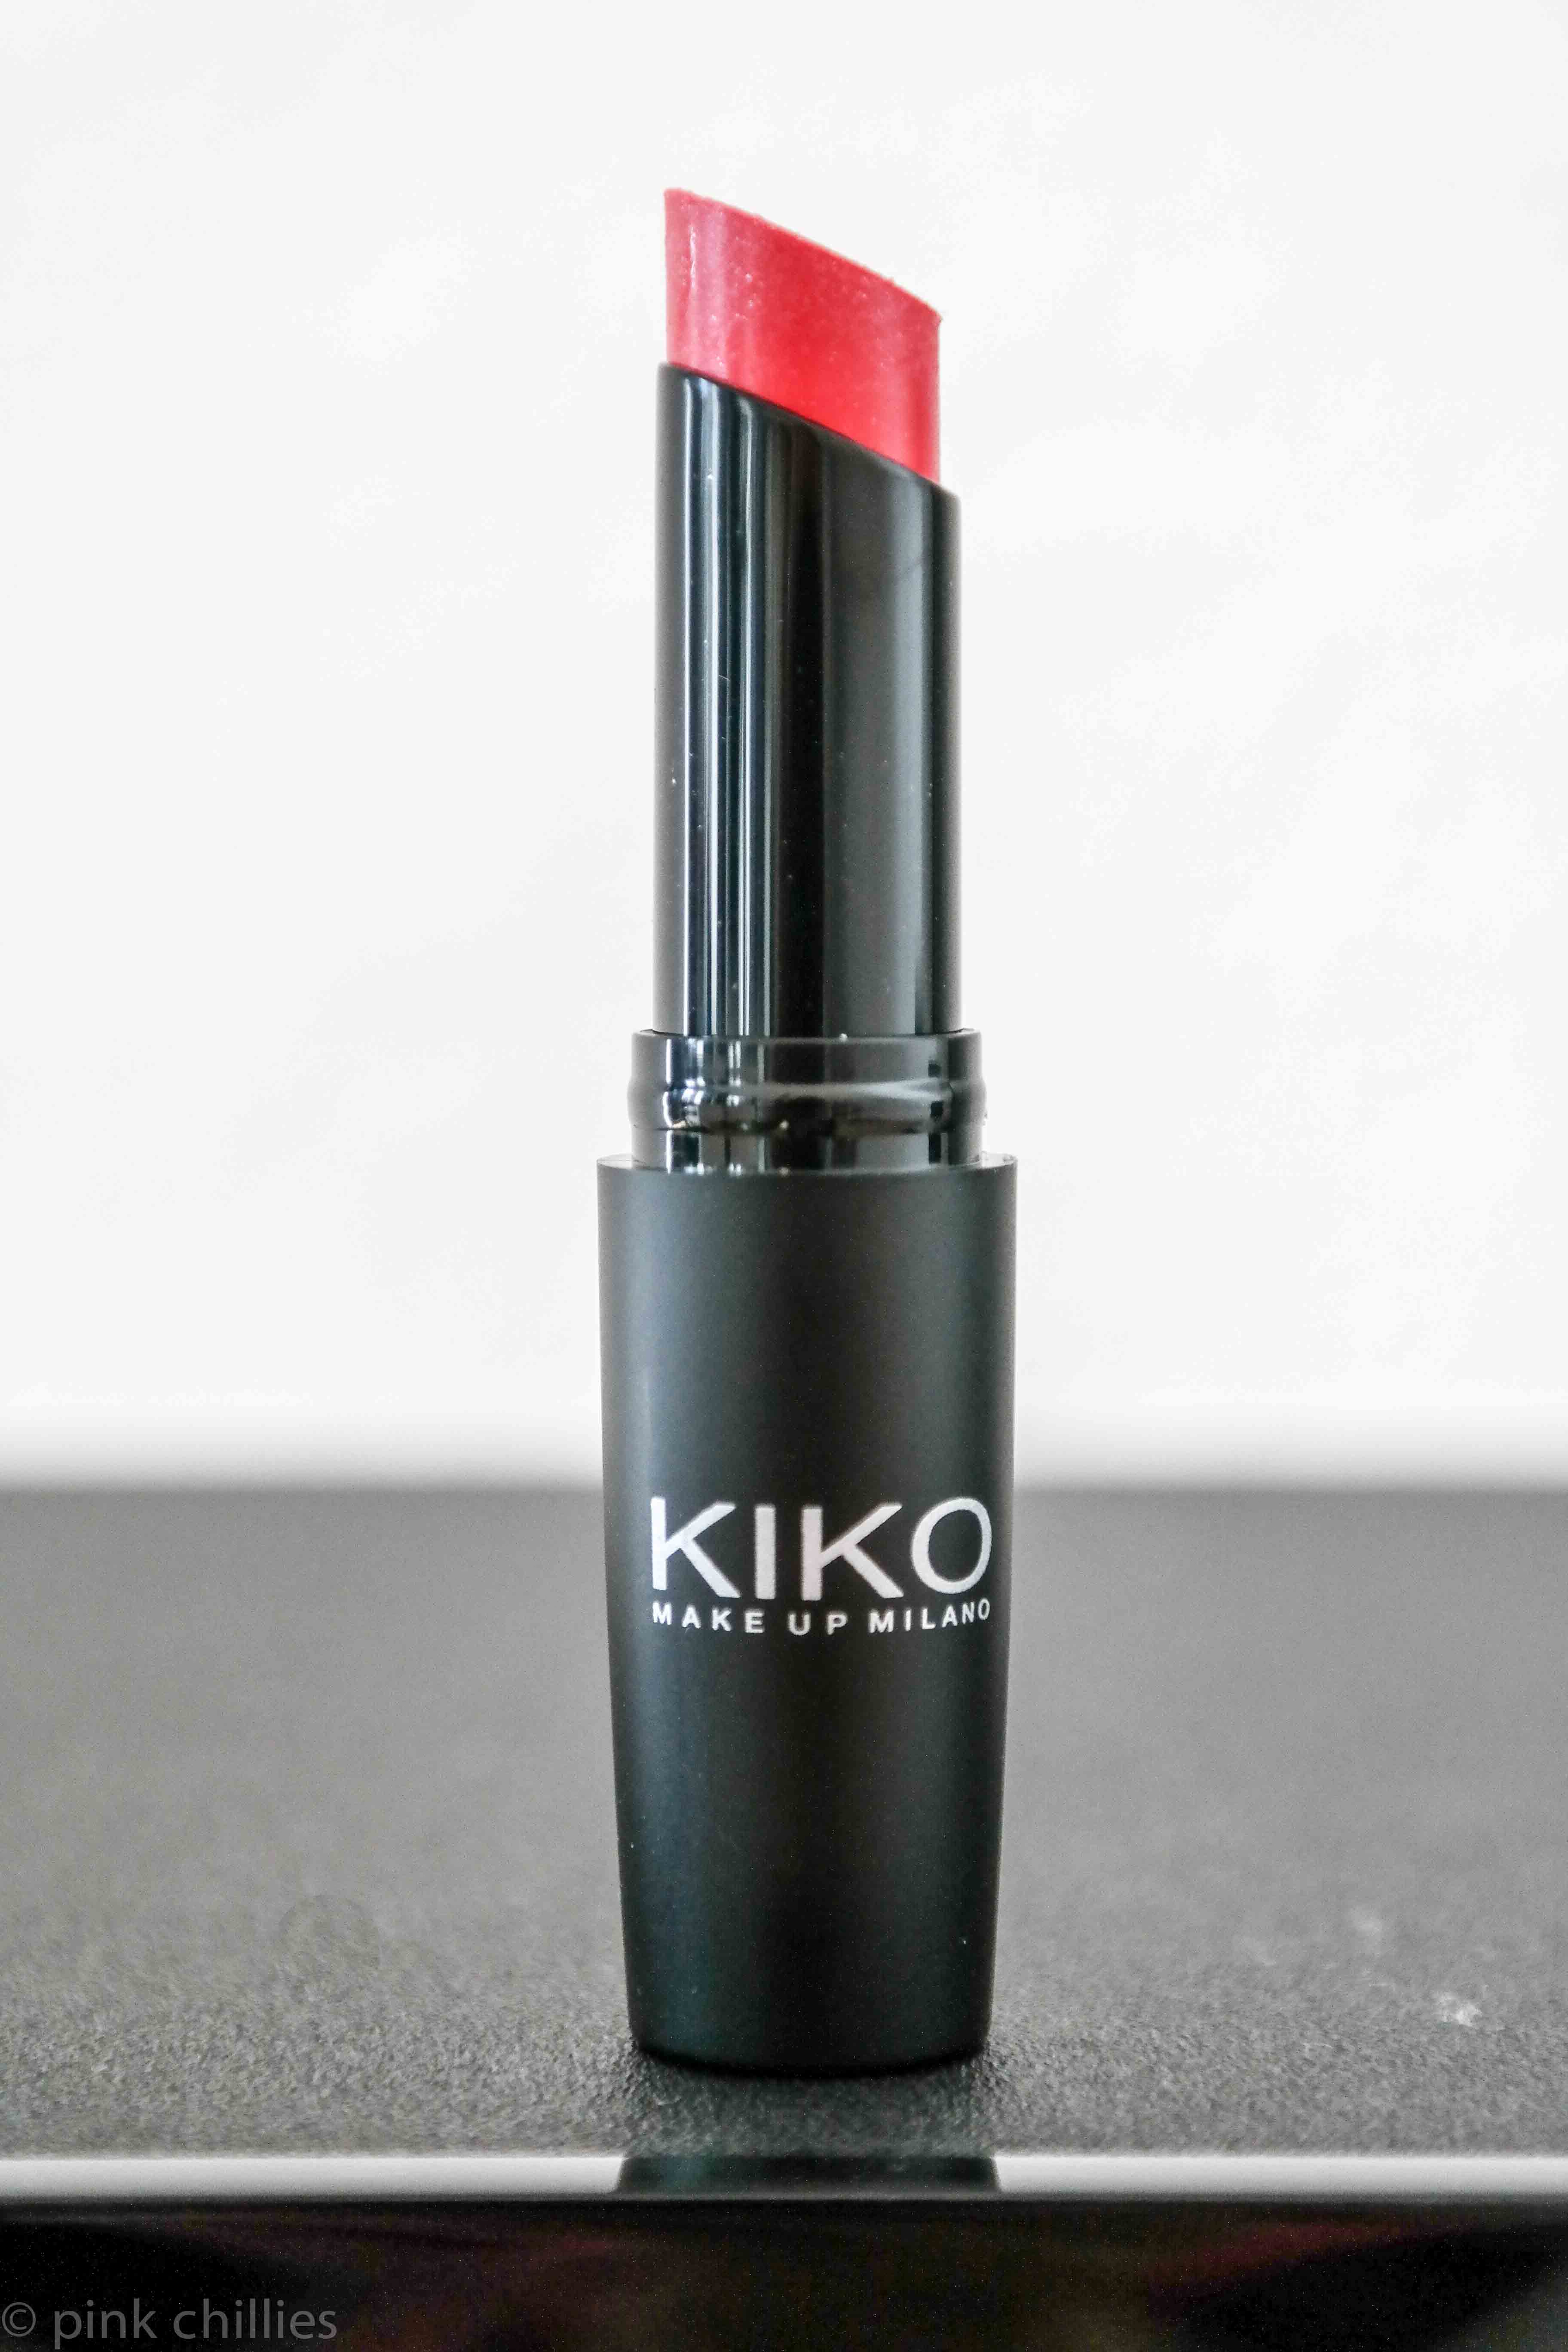 Kiko Make Up Milan Lipstick